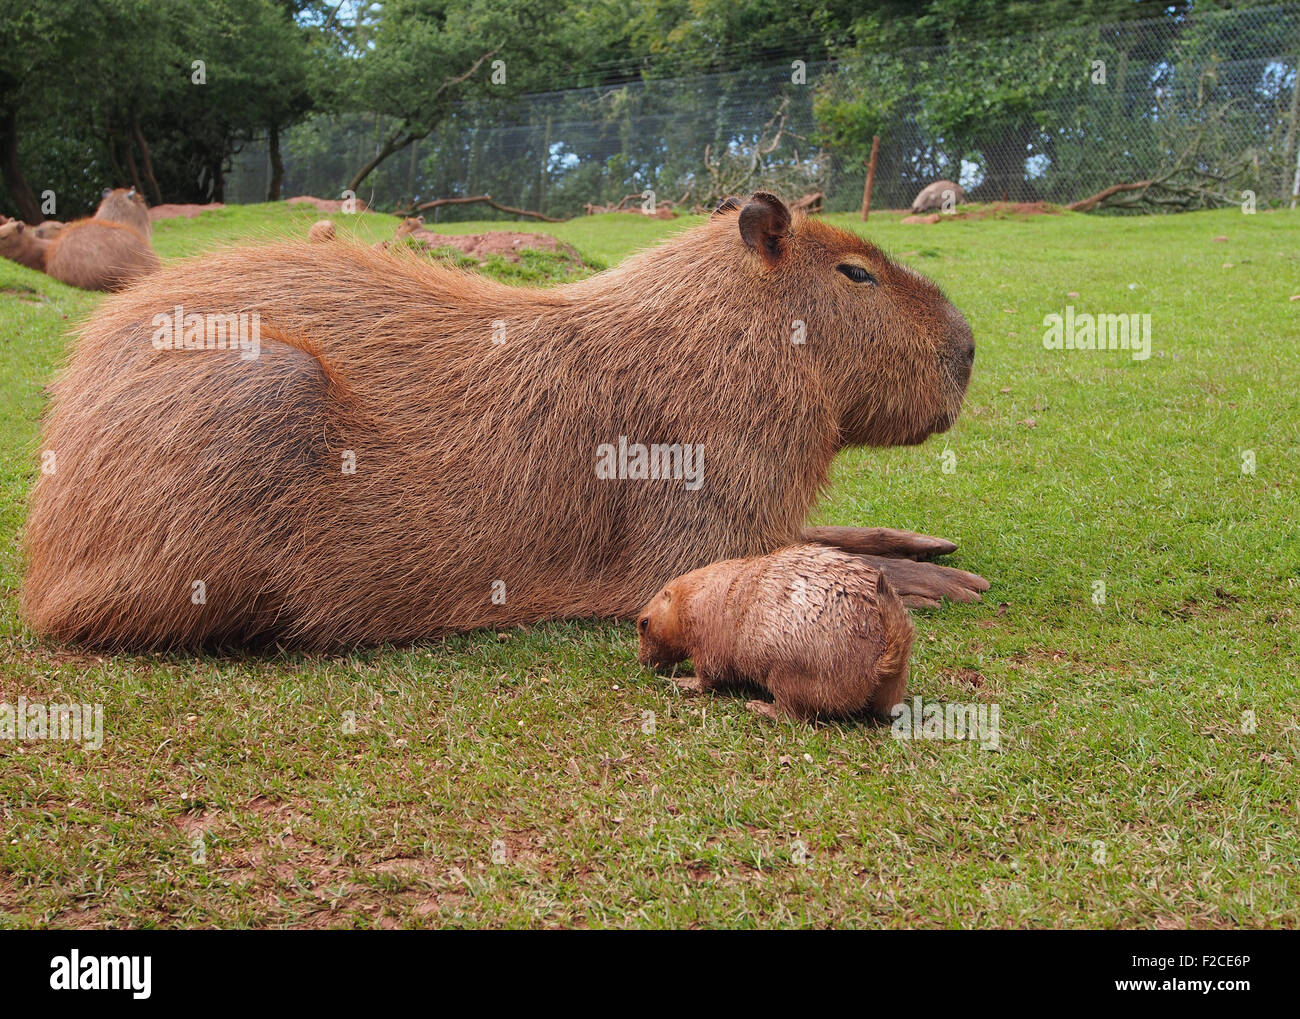 Capybara ( hydrochoerus hydrochaeris) with a prairie dog at the Lakeland Safari Zoo in Cumbria, England, UK. Stock Photo